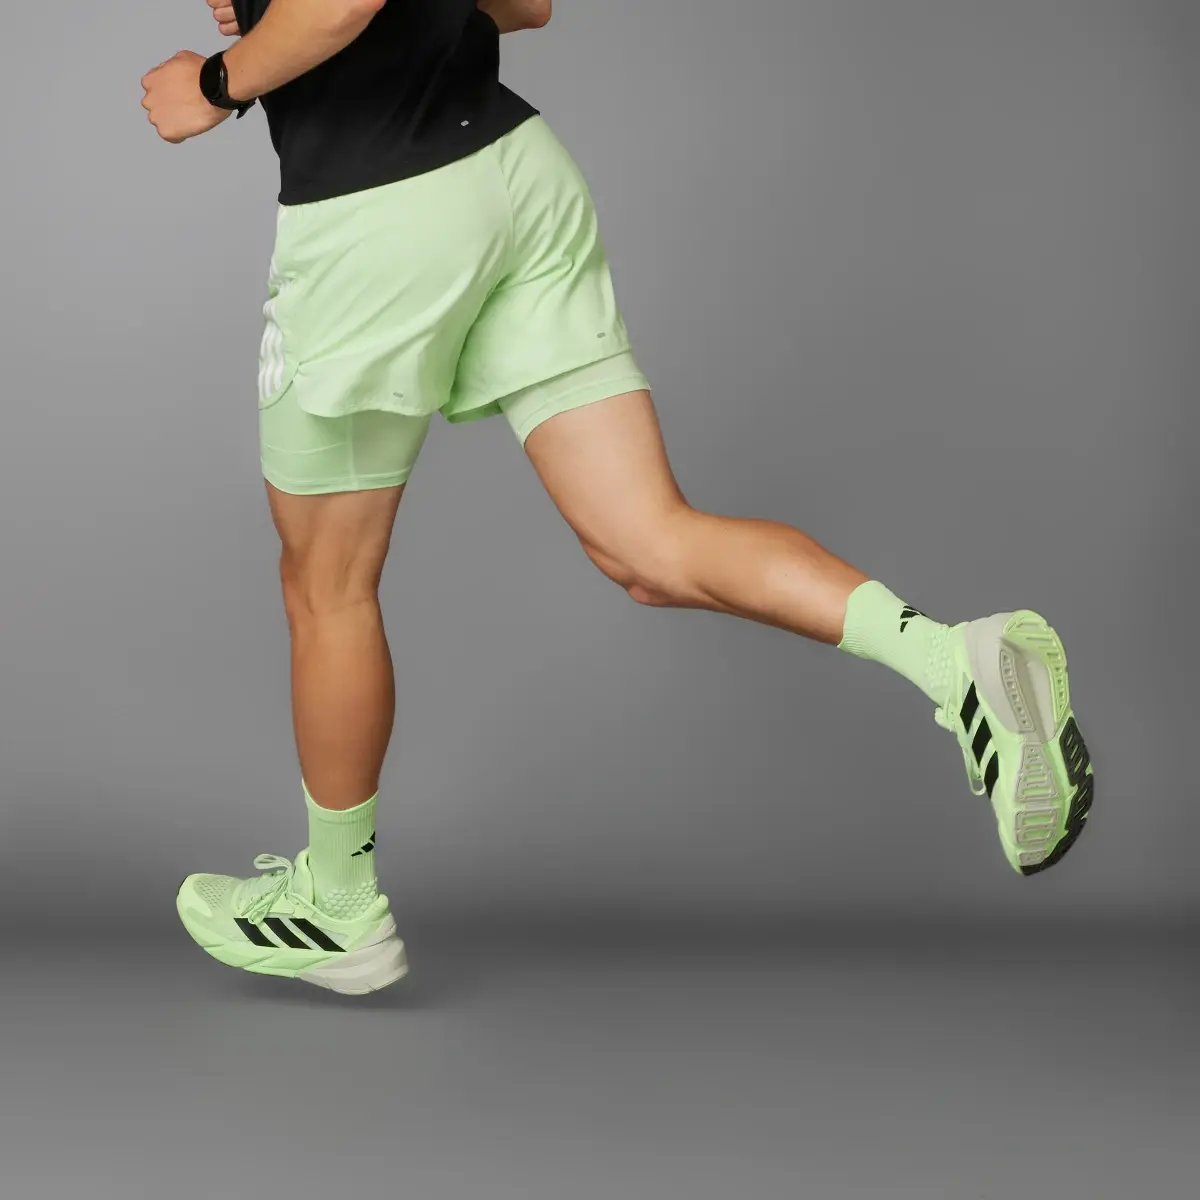 Adidas Own the Run 3-Stripes 2-in-1 Shorts. 2